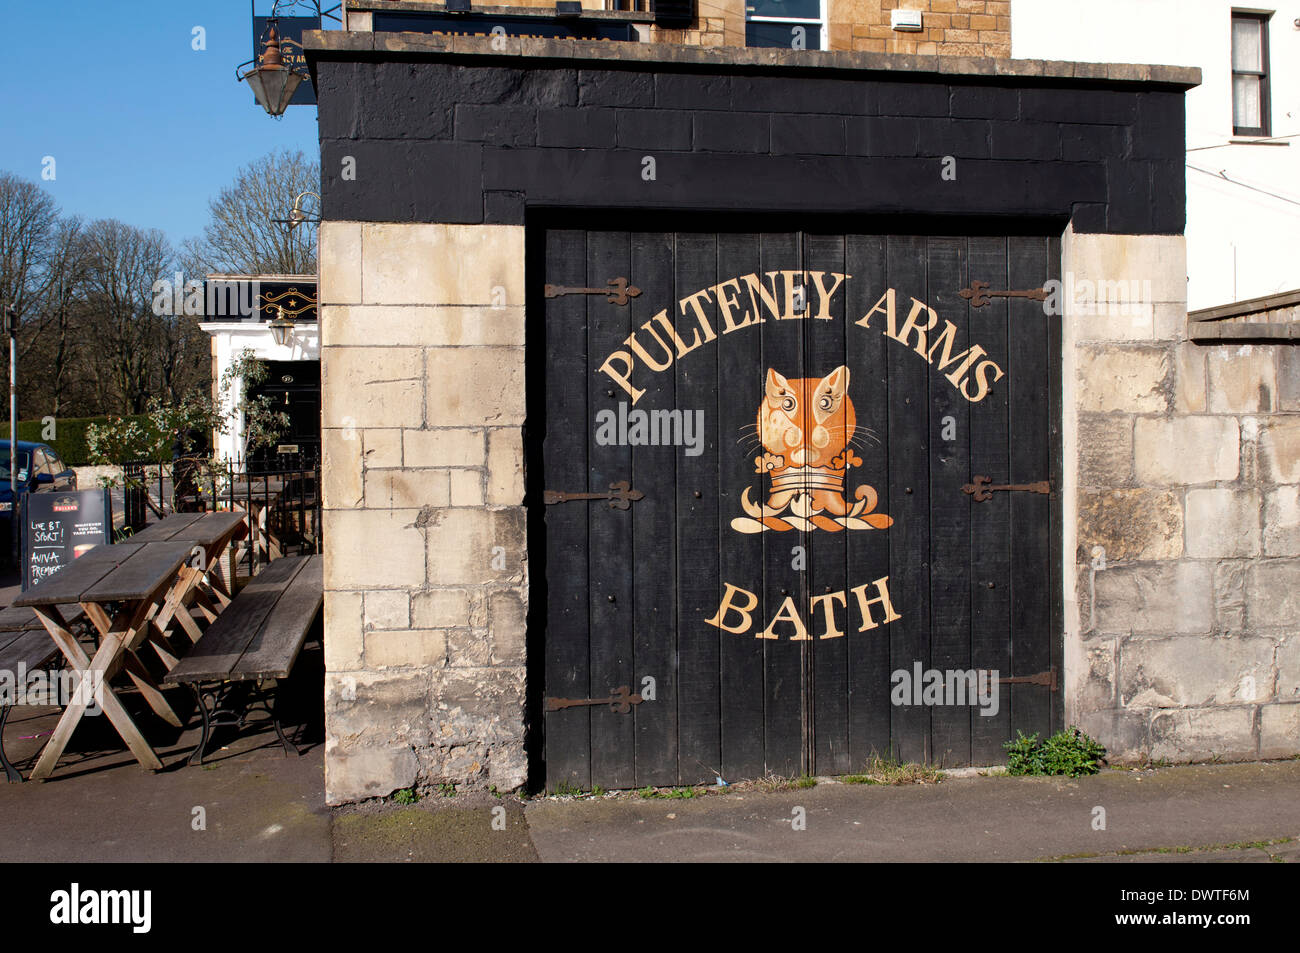 The Pulteney Arms pub, Bath, Somerset, England, UK Stock Photo